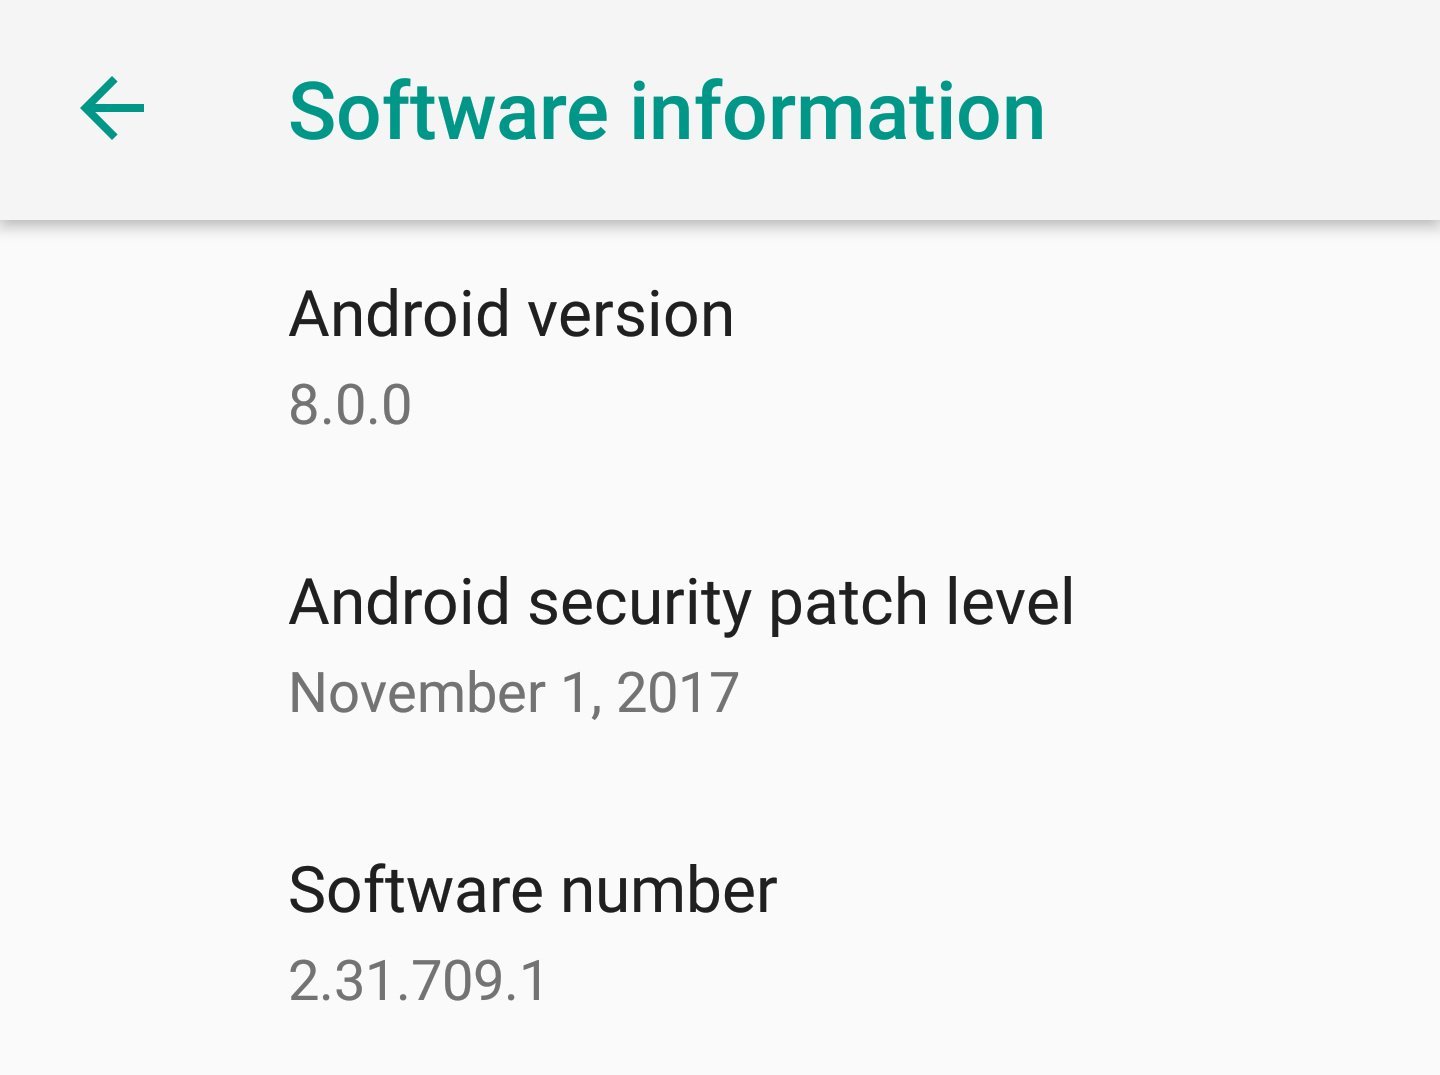 HTC U11 Android 8.0 Oreo